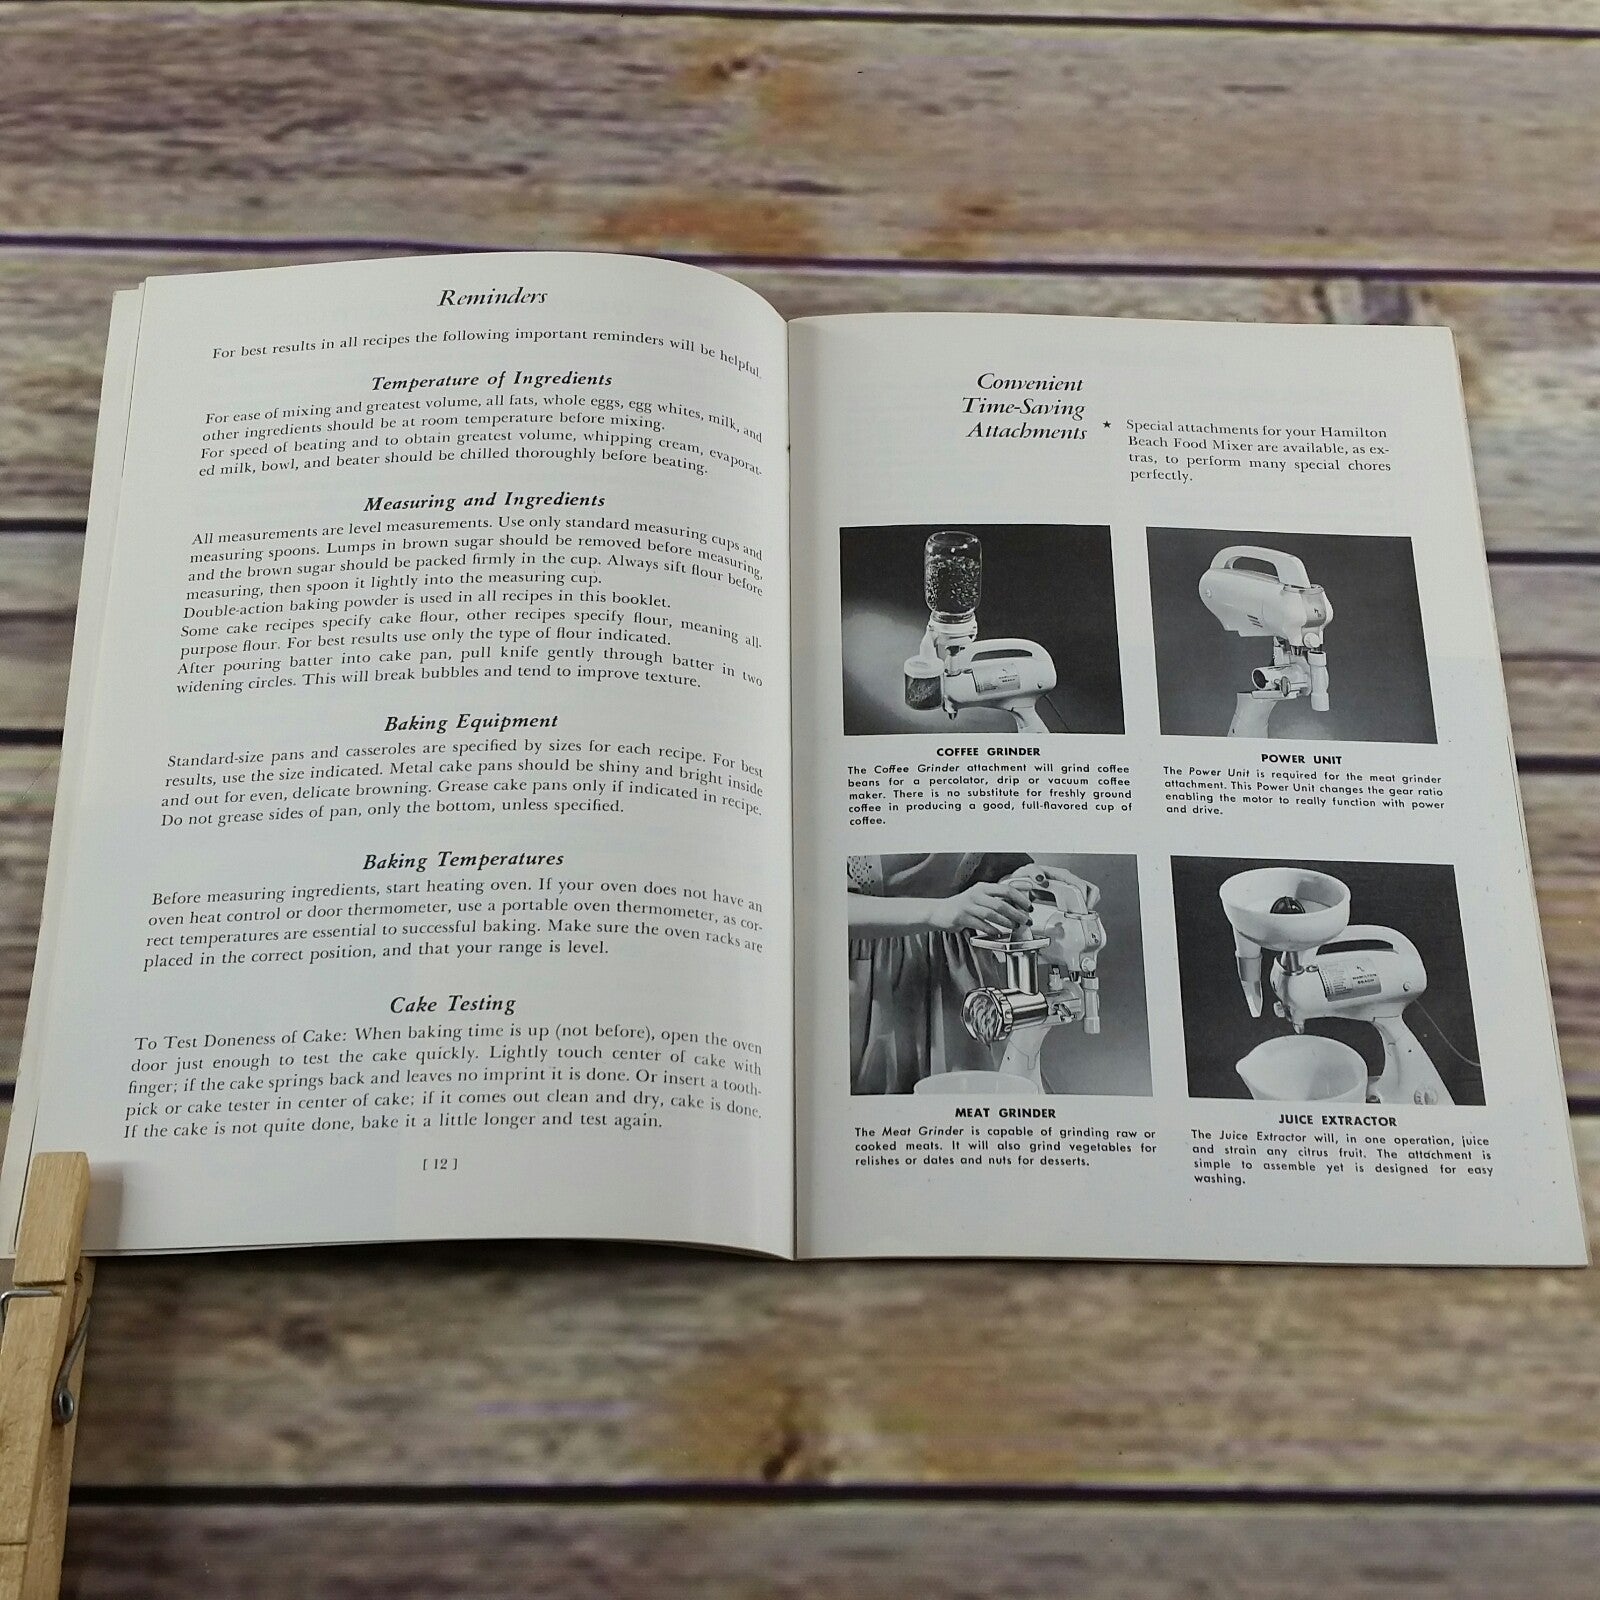 Vintage Hamilton Beach Model K Food Mixer Recipes and Instructions Manual 1950s 1960s Paperback Booklet Cookbook - At Grandma's Table